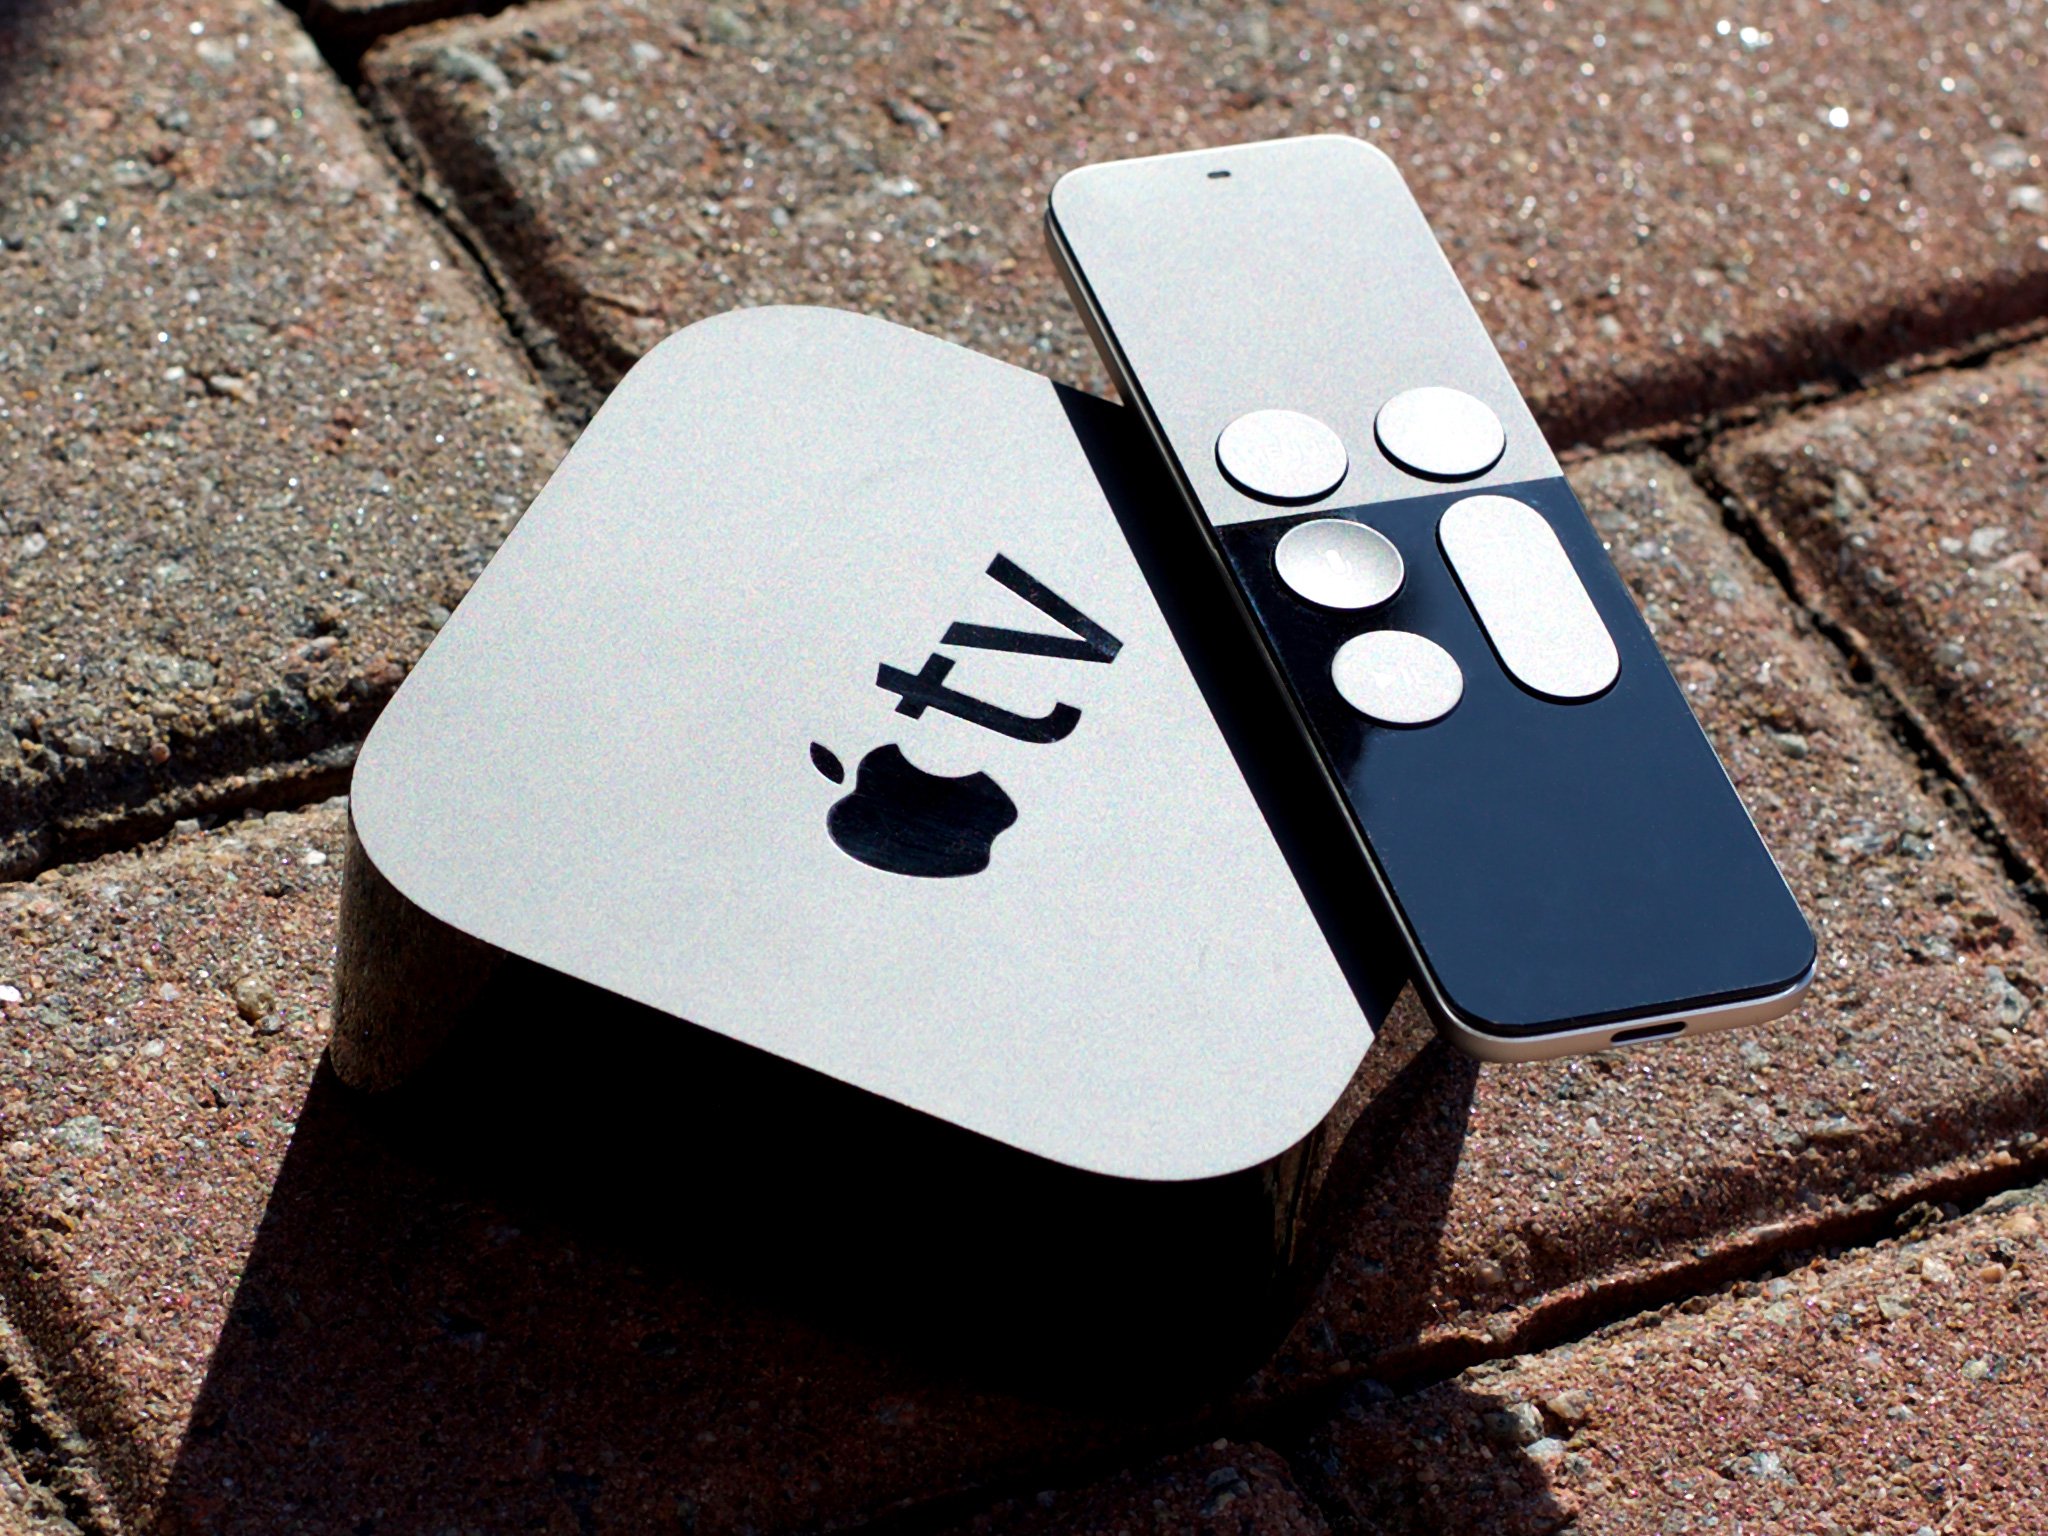 32 GB Apple TV 2015